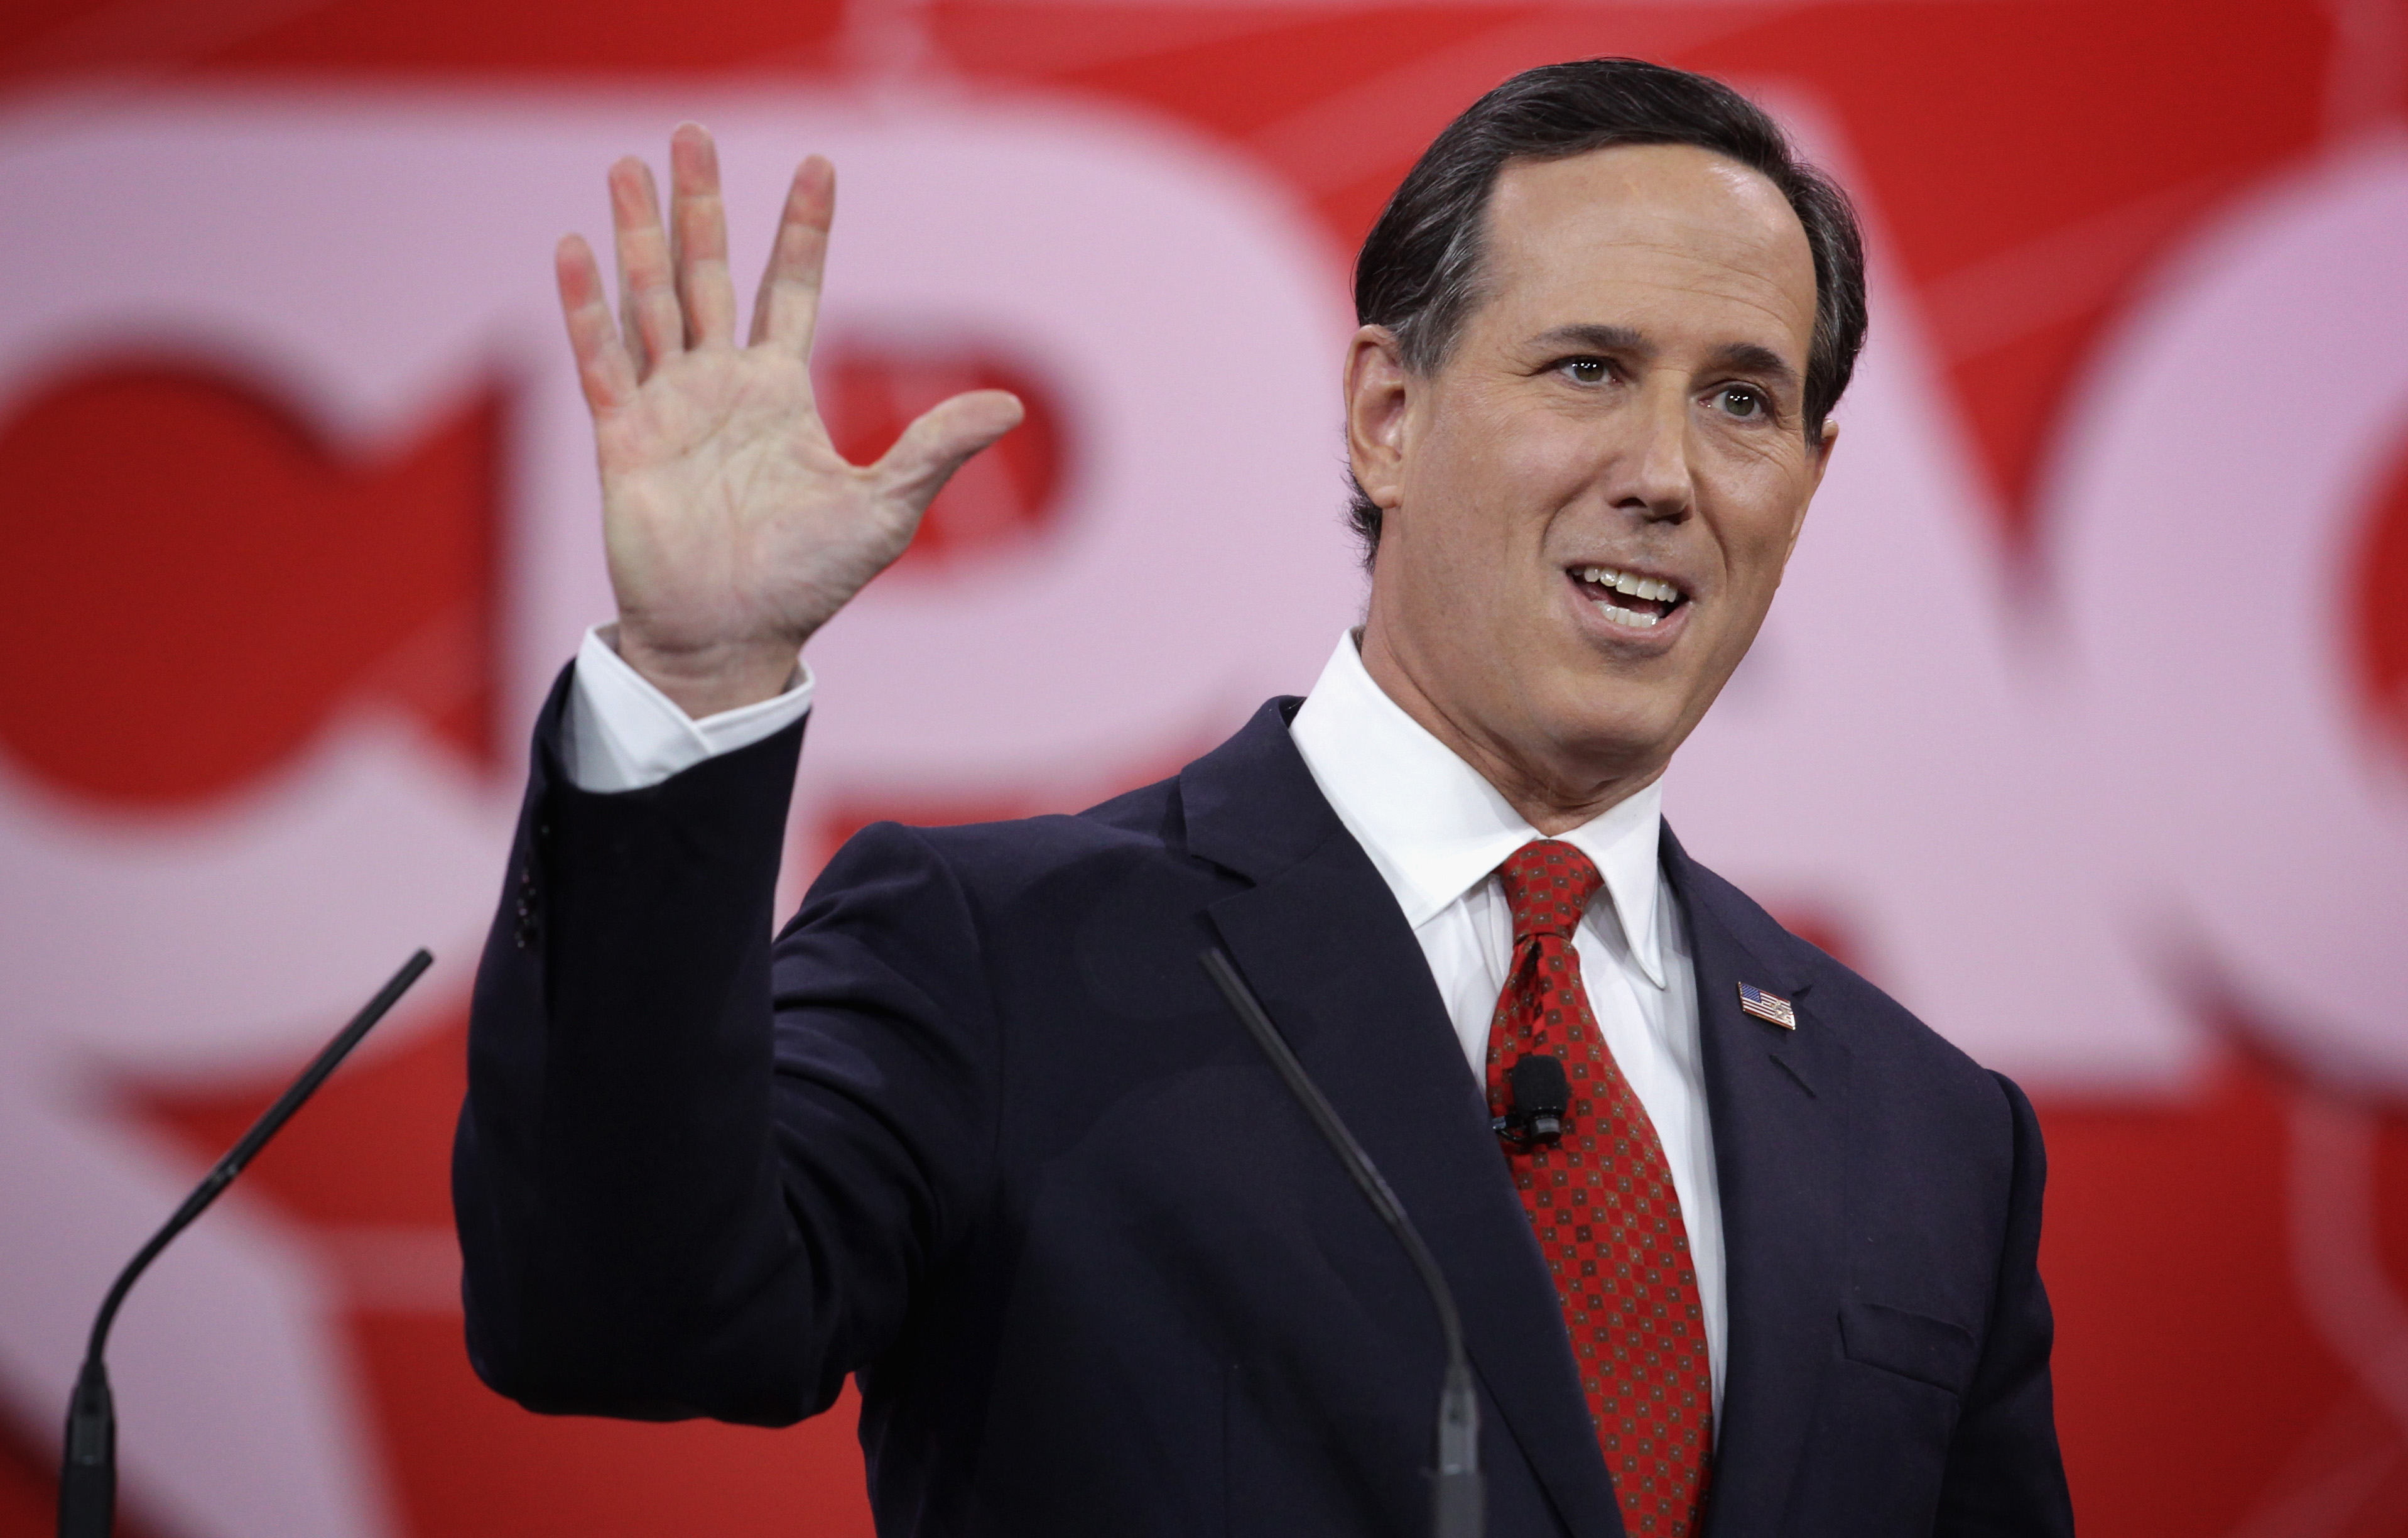 Rick Santorum quits presidential race, endorses Marco Rubio - CBS News